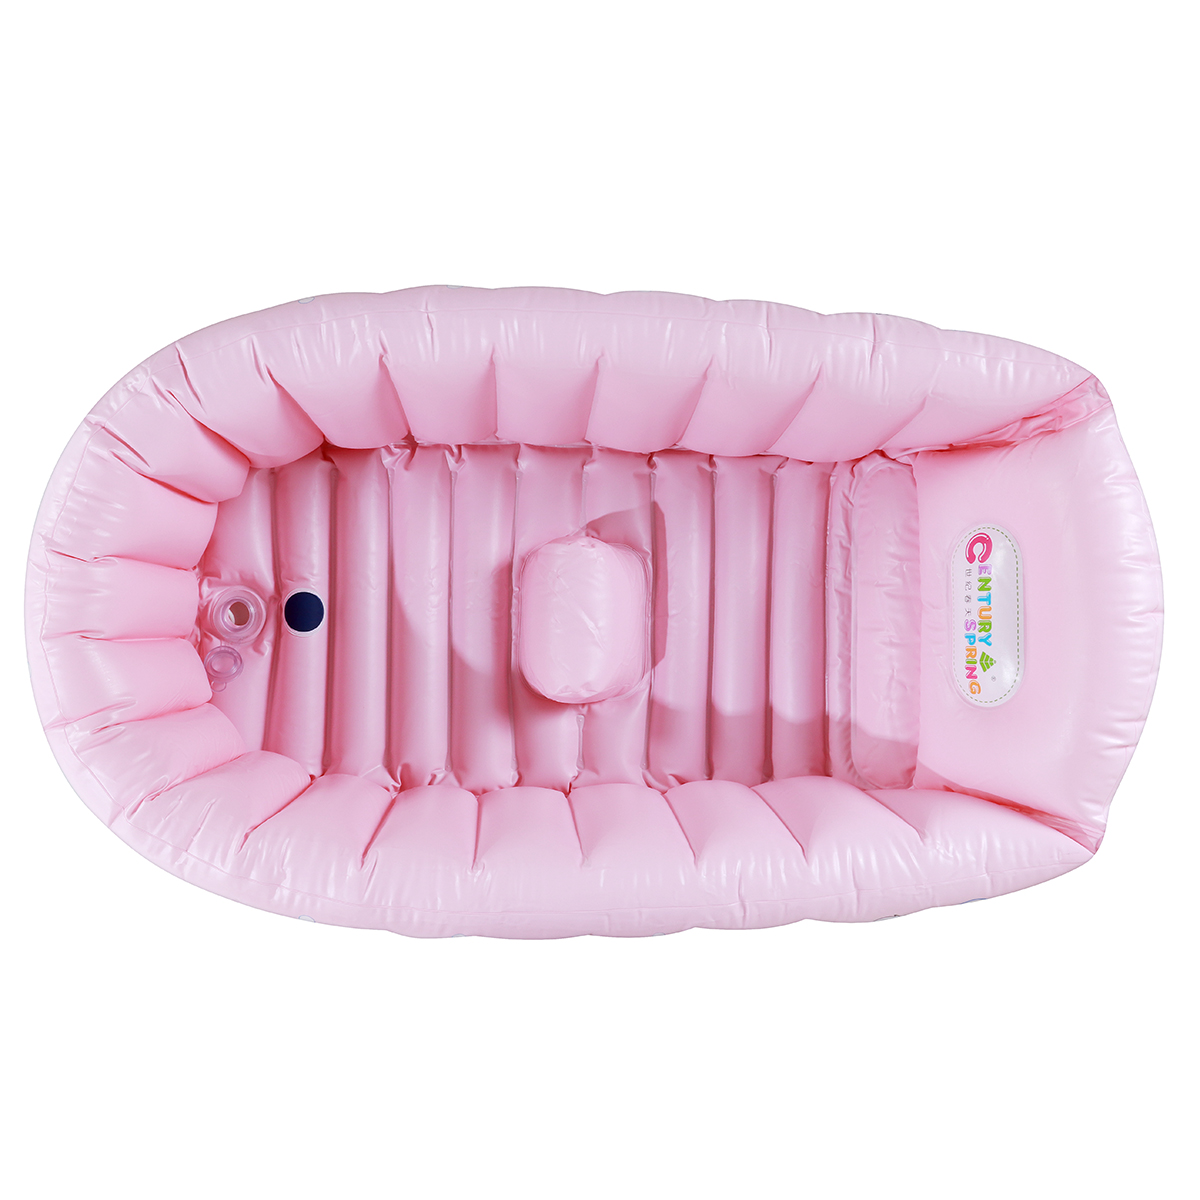 Baby-Inflatable-Bath-Tub-PVC-Swimming-Pool-Shower-Bath-Folding-Kids-Portable-Swimming-Pool-for-0-3-Y-1841741-6